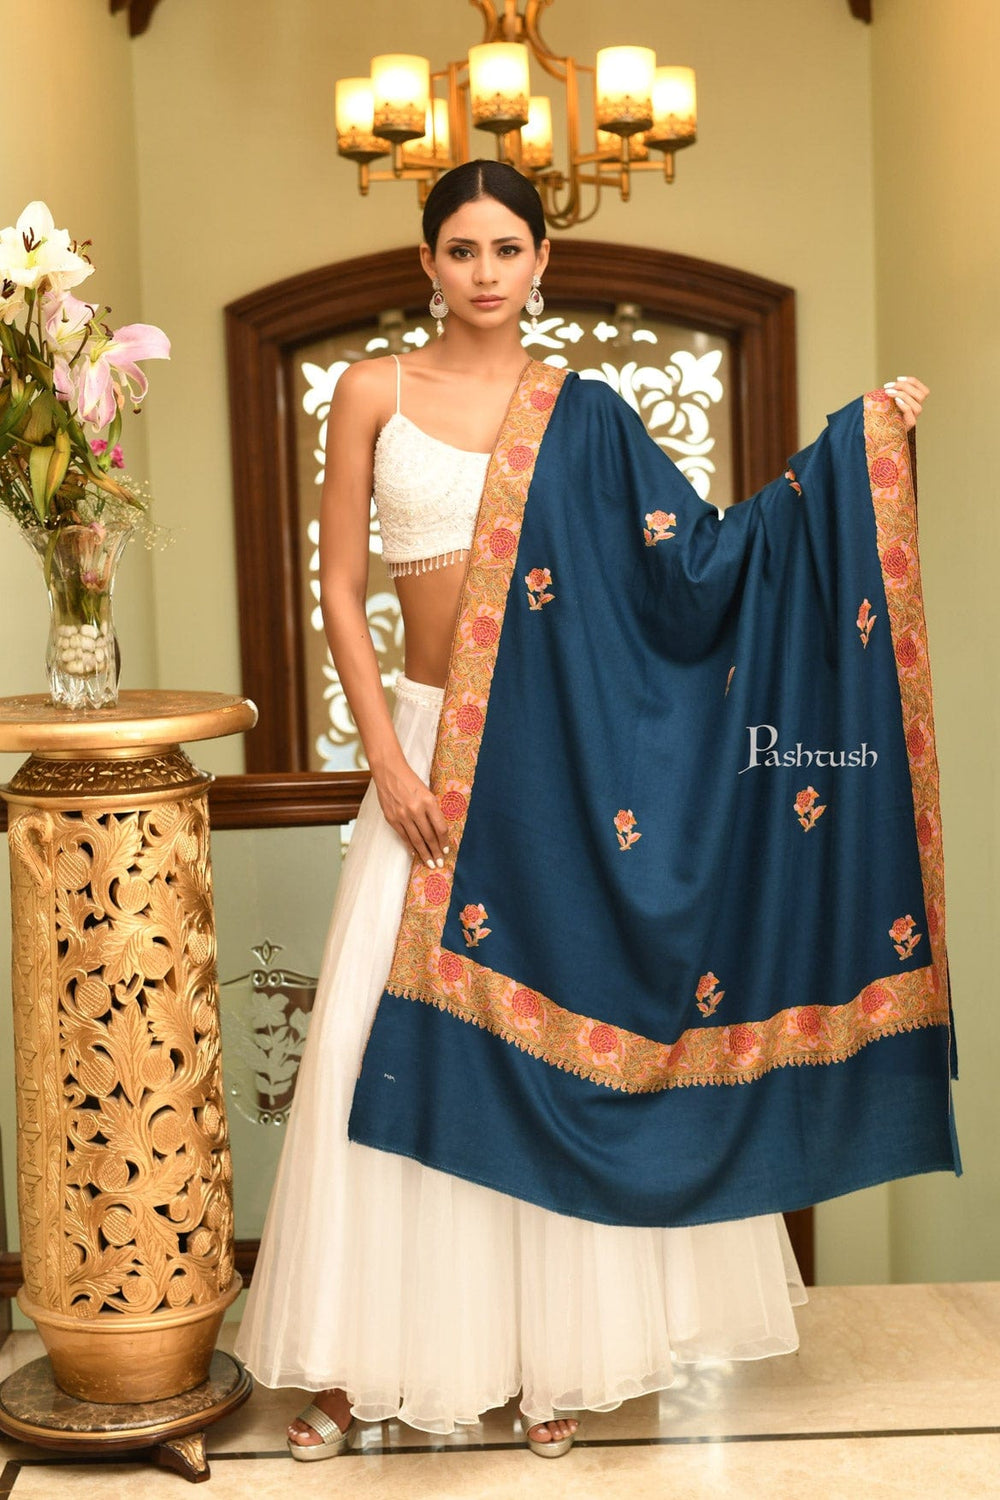 Pashtush India Womens Shawls Pashtush Womens Pure Pashmina Shawl, Challa Daur - Gulaabdar Sozni Embroidery Design, Arabic Sea Blue